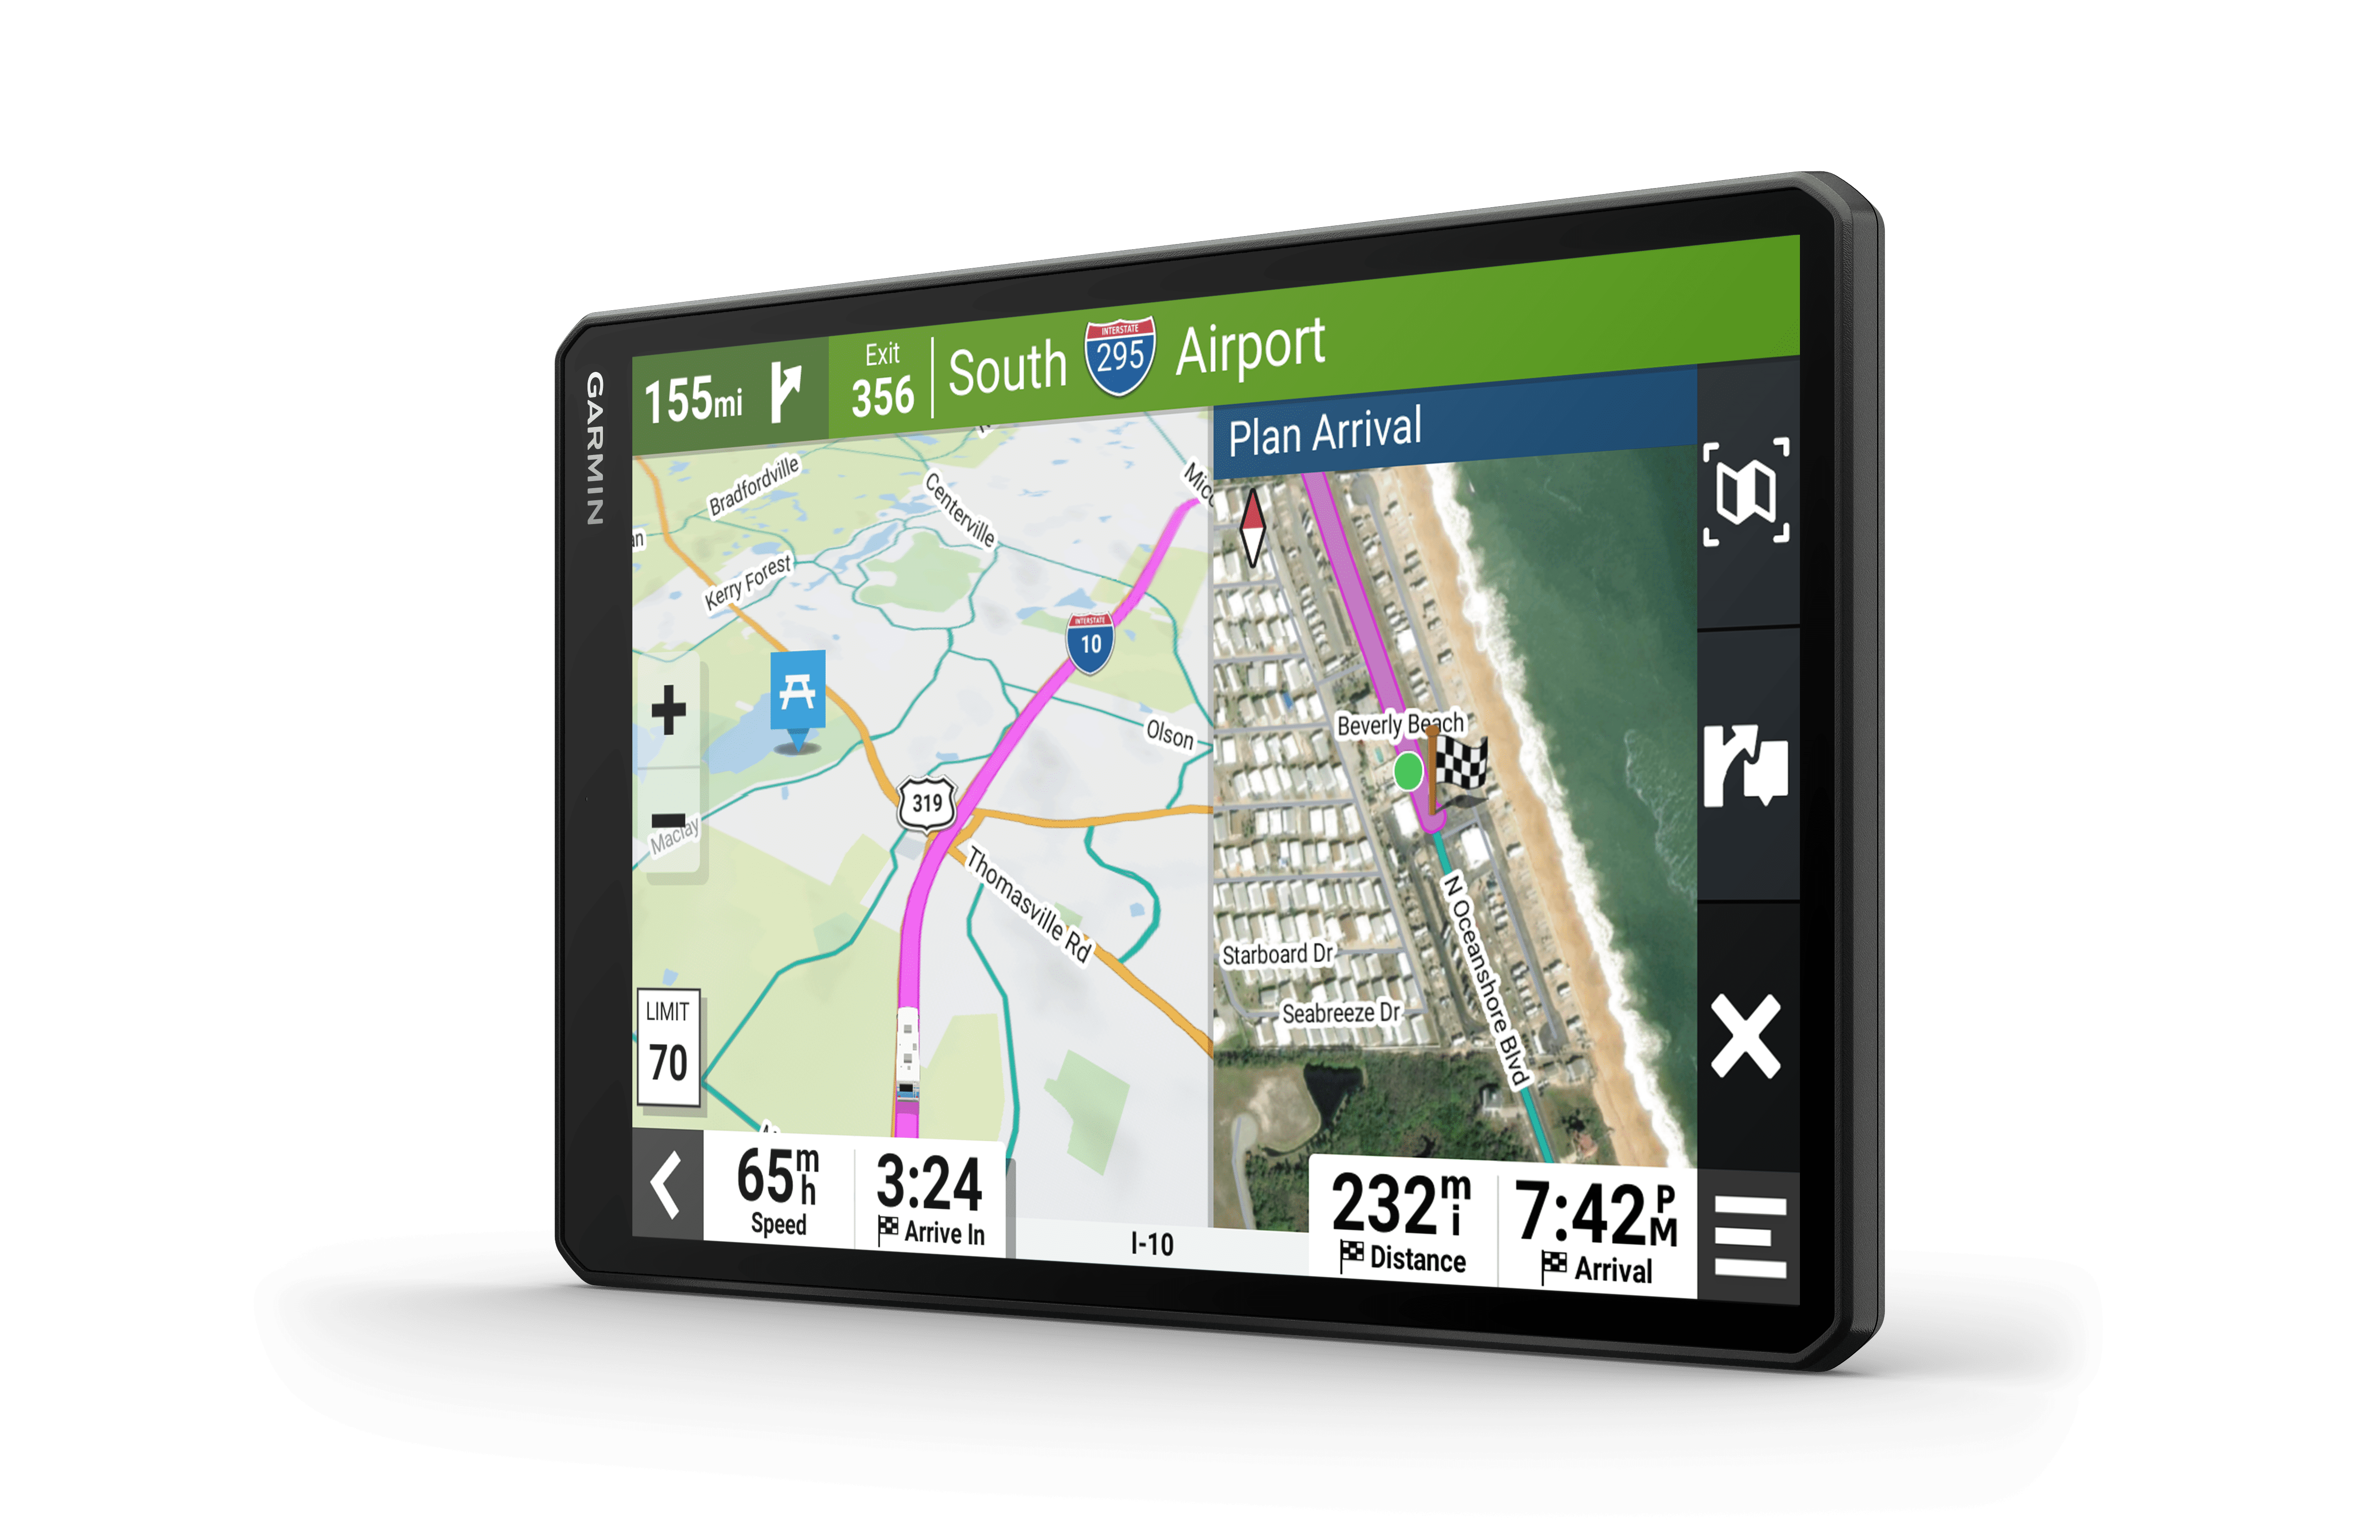 RV 895 Garmin GPS Device Navigation